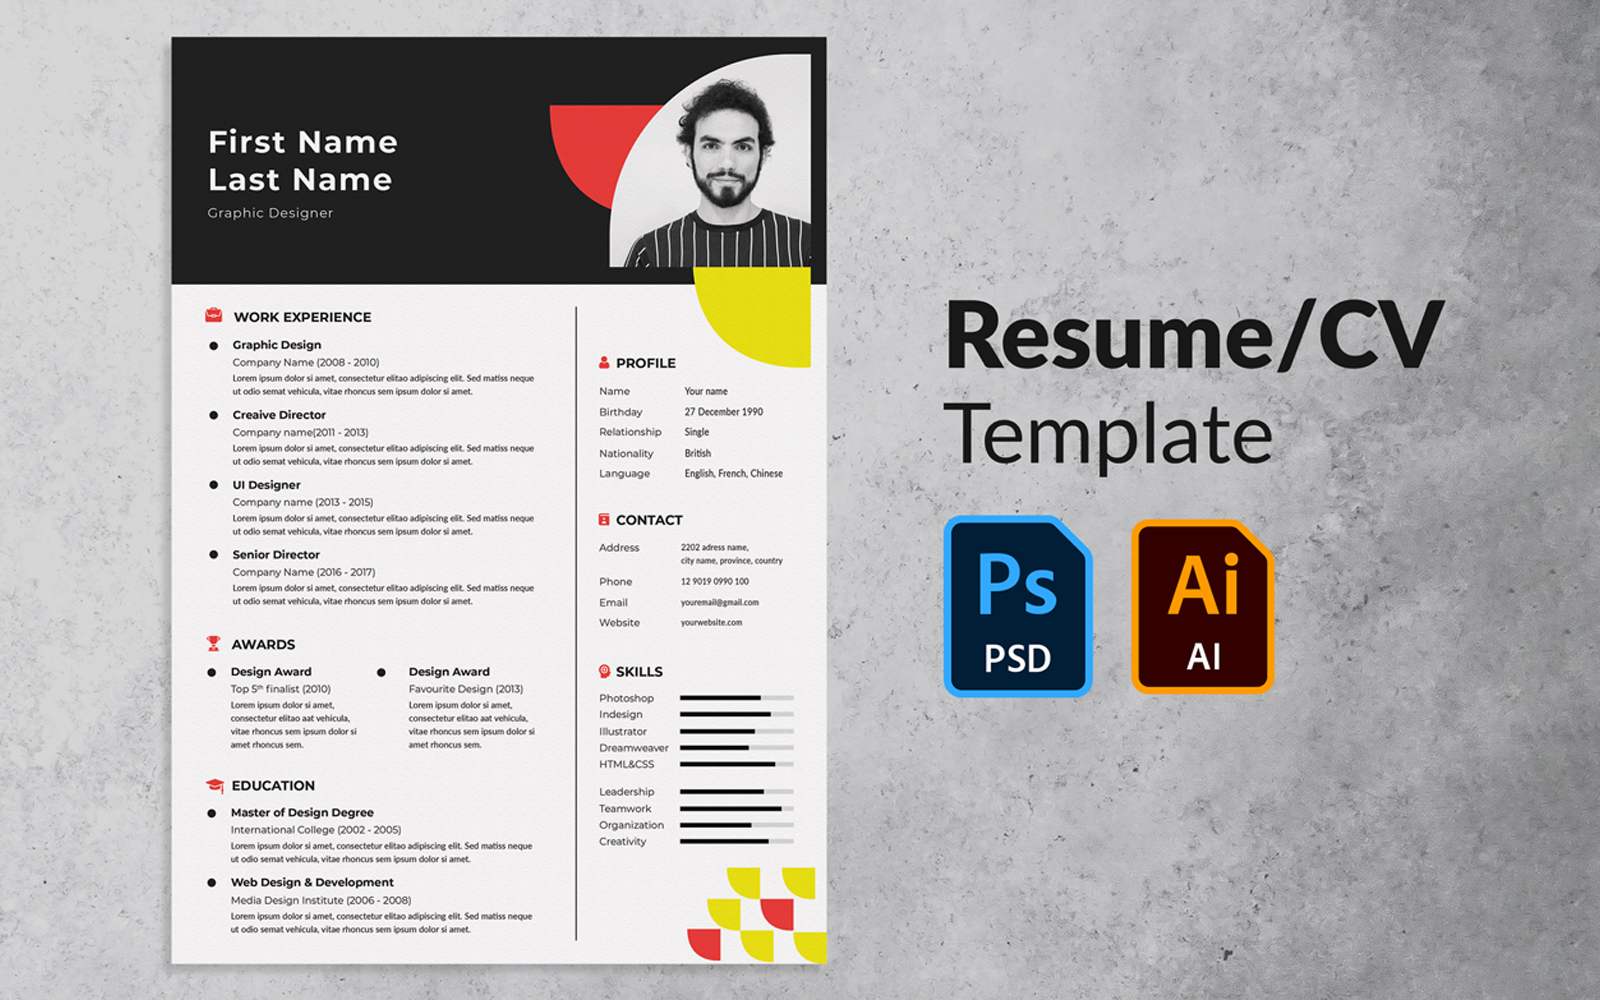 CV Template - Resume for Graphic designer